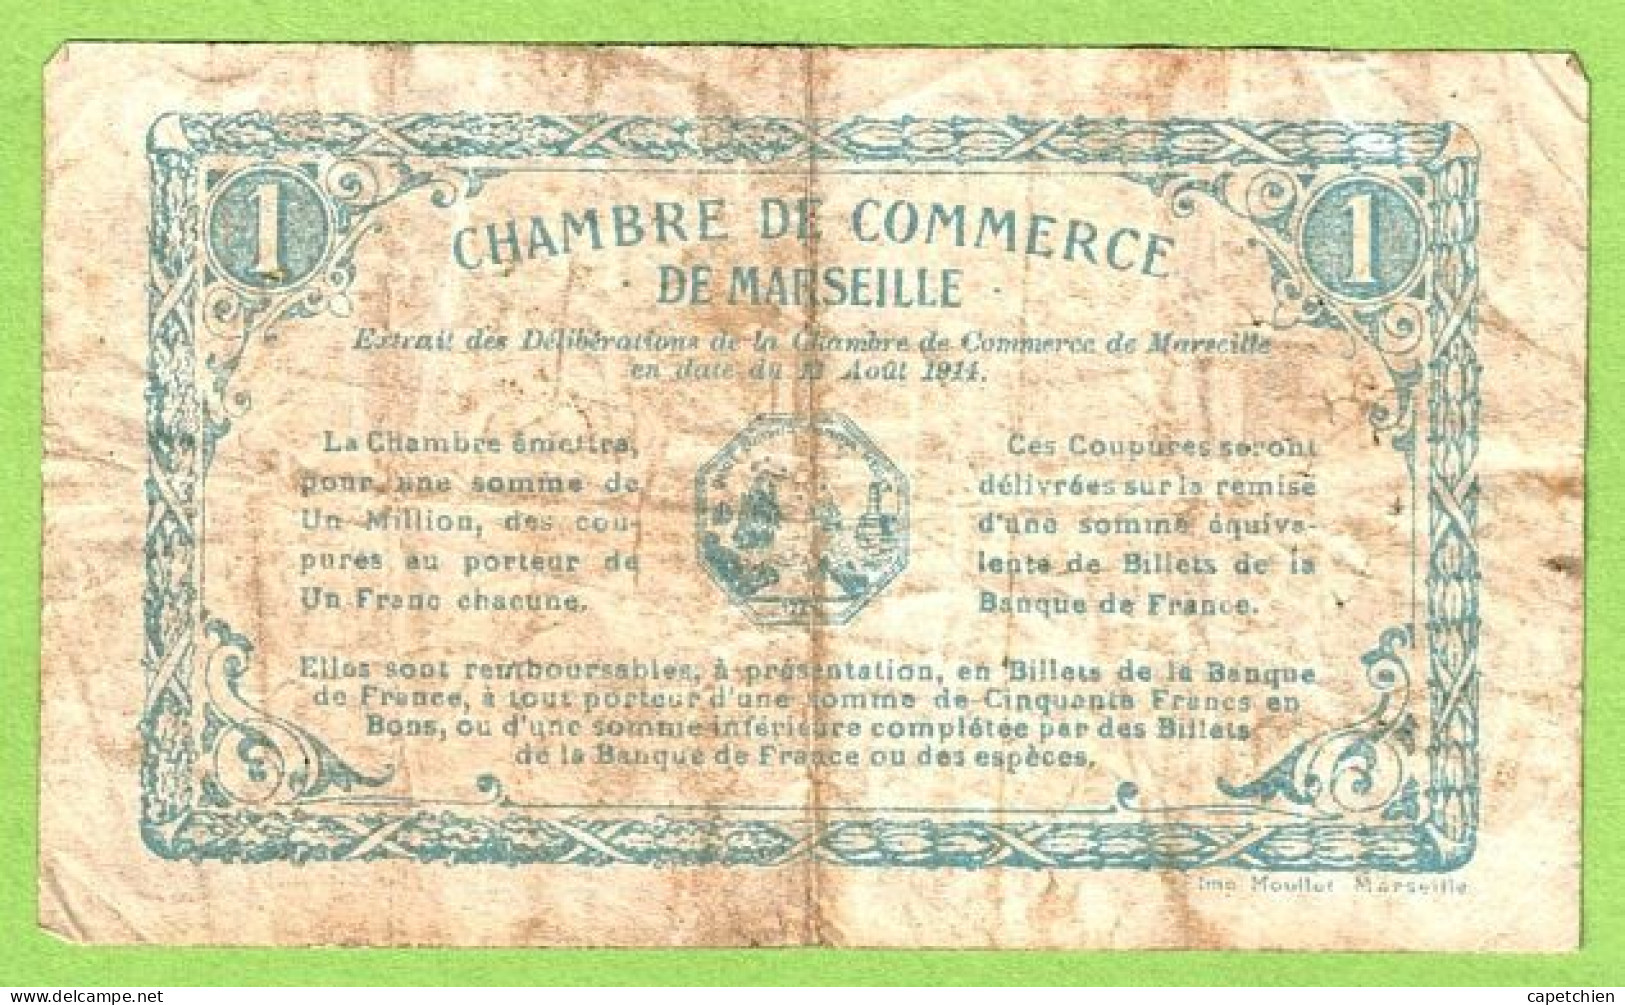 FRANCE / CHAMBRE De COMMERCE / MARSEILLE / 1 FRANC / 13 AOUT 1914 / N° 97921 / SERIE E - Cámara De Comercio